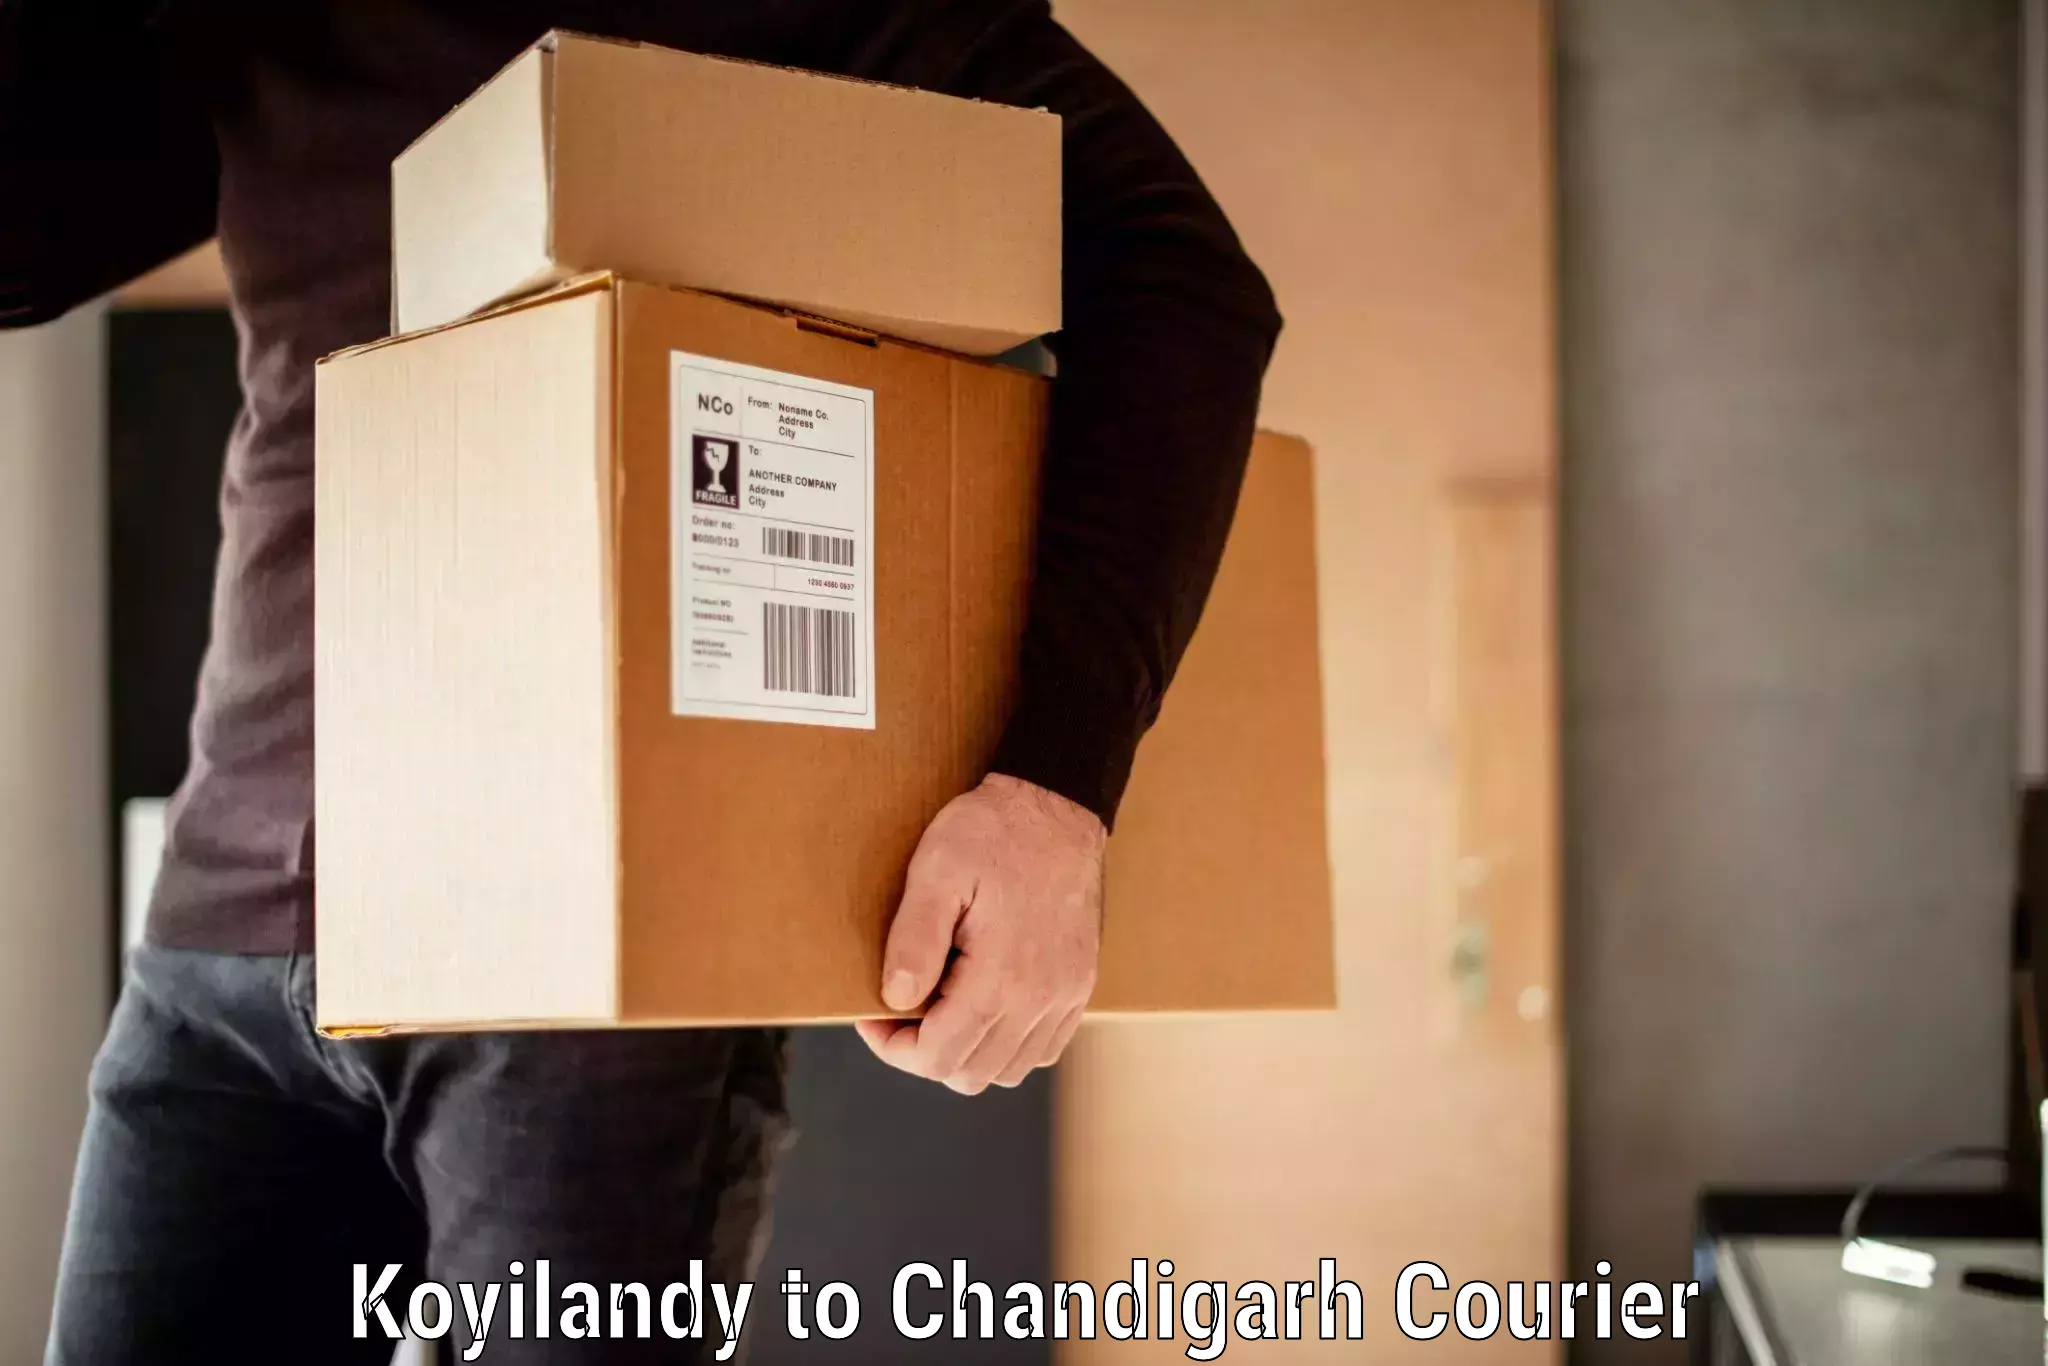 Baggage transport professionals Koyilandy to Chandigarh